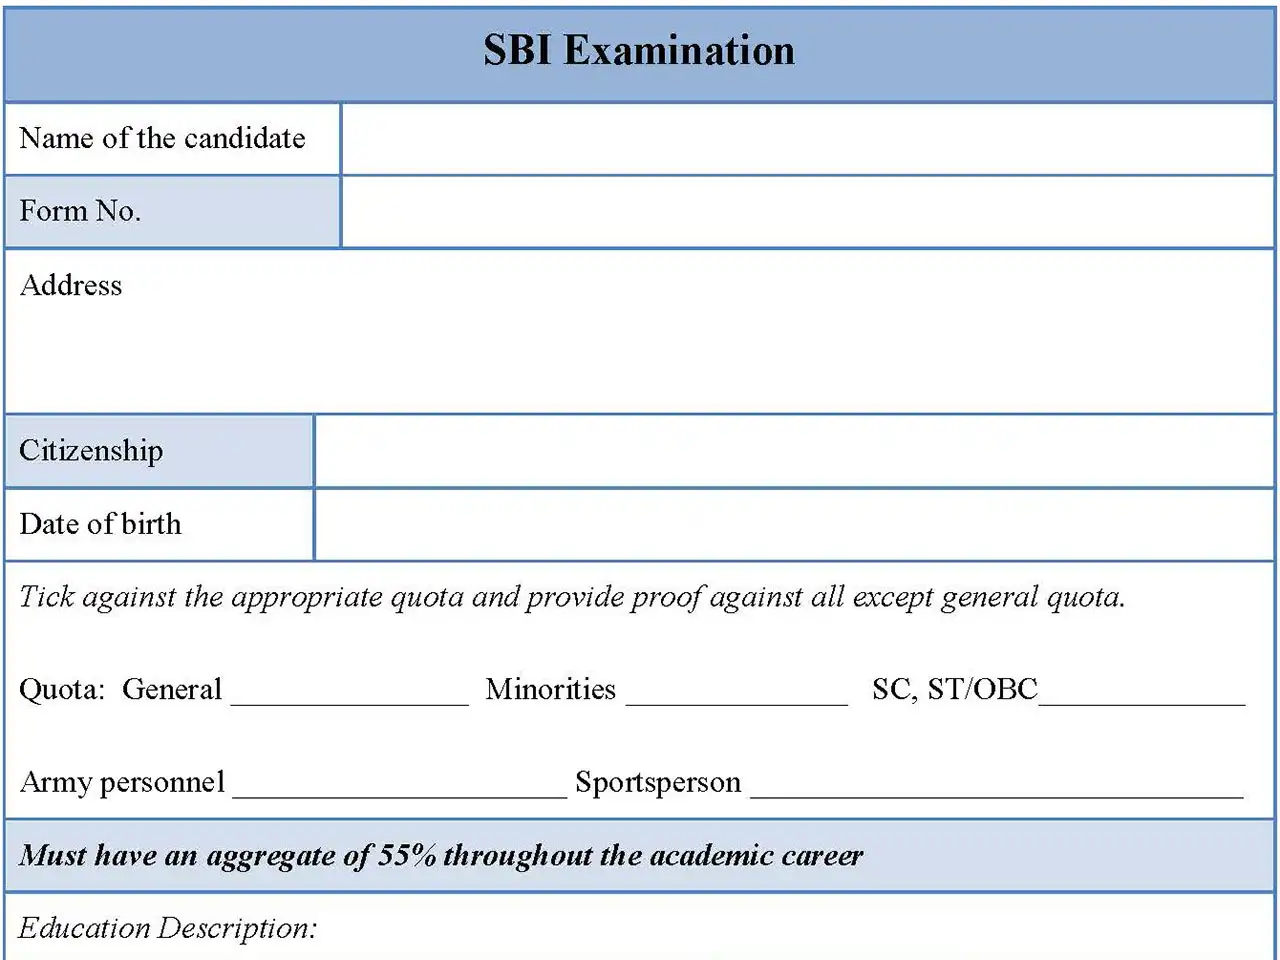 SBI Examination Form